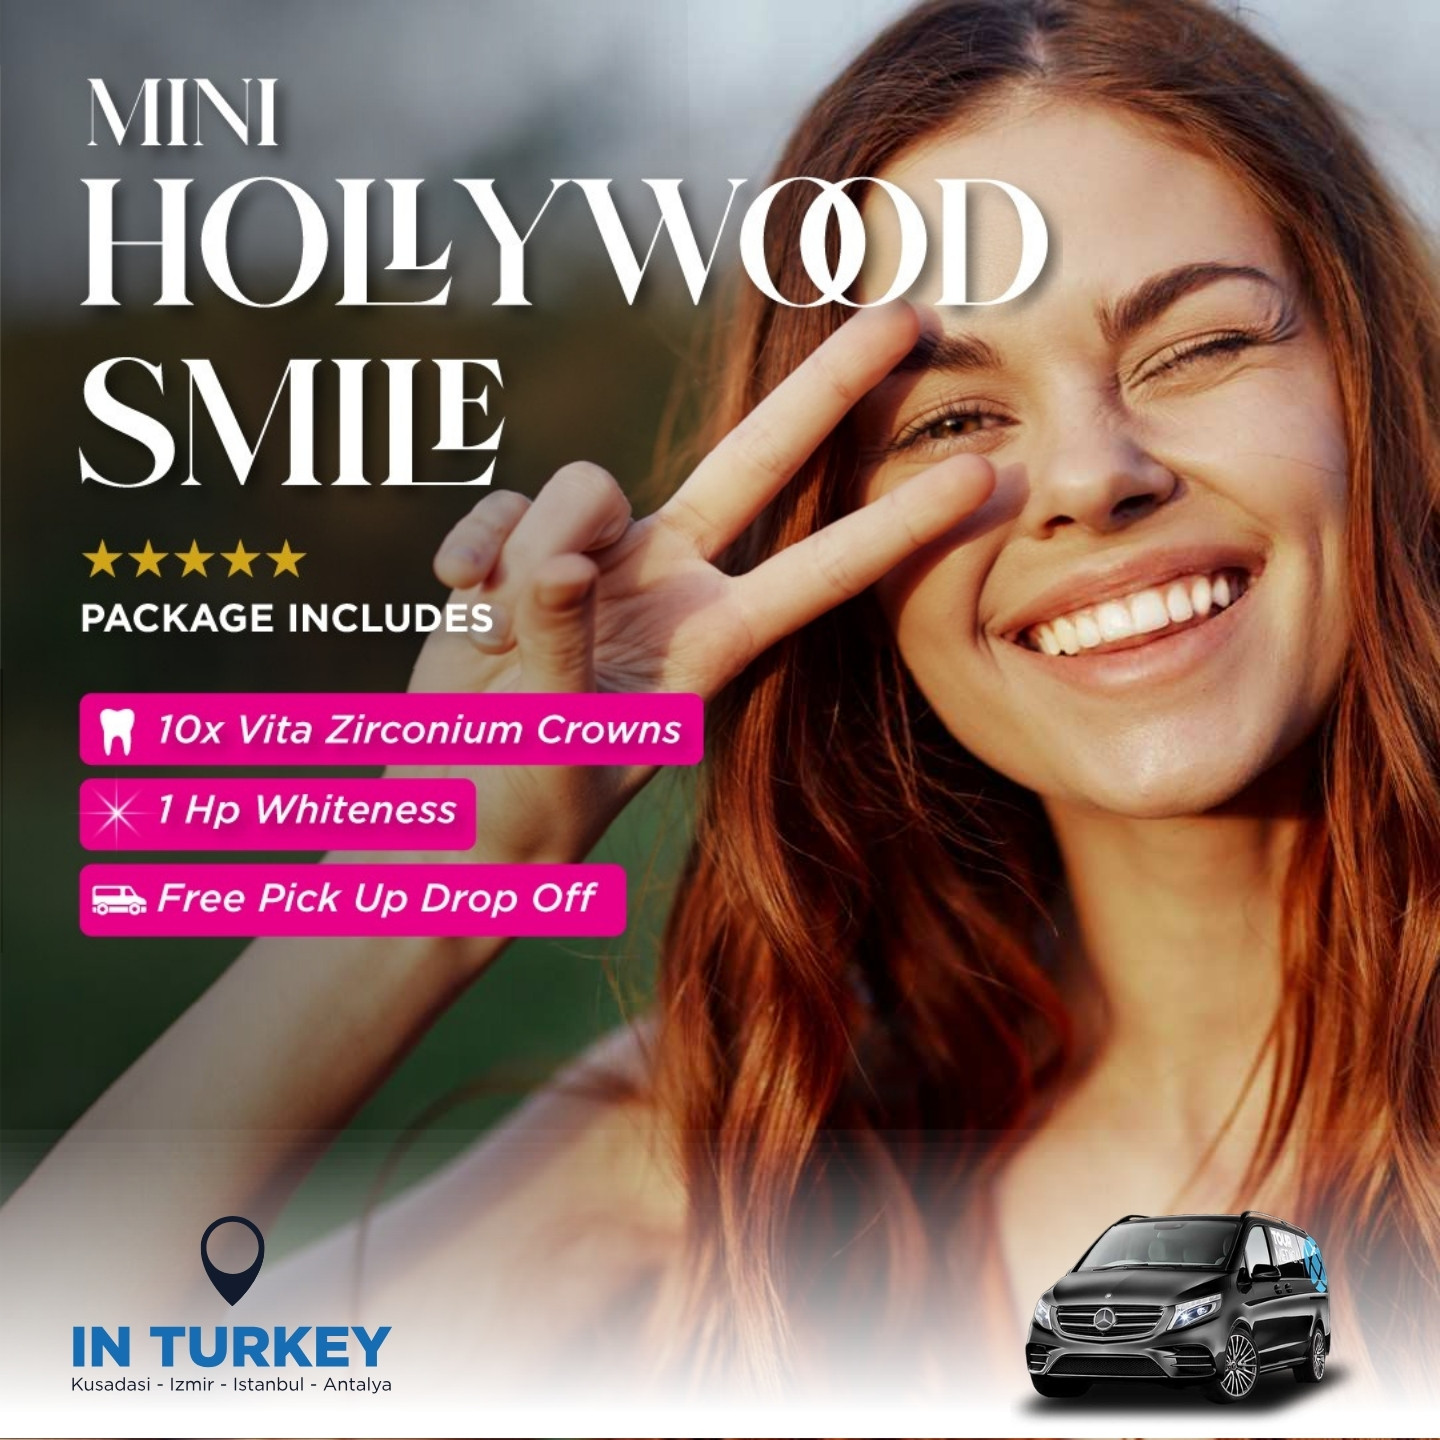 Mini Hollywood Smile Offer Offer W img